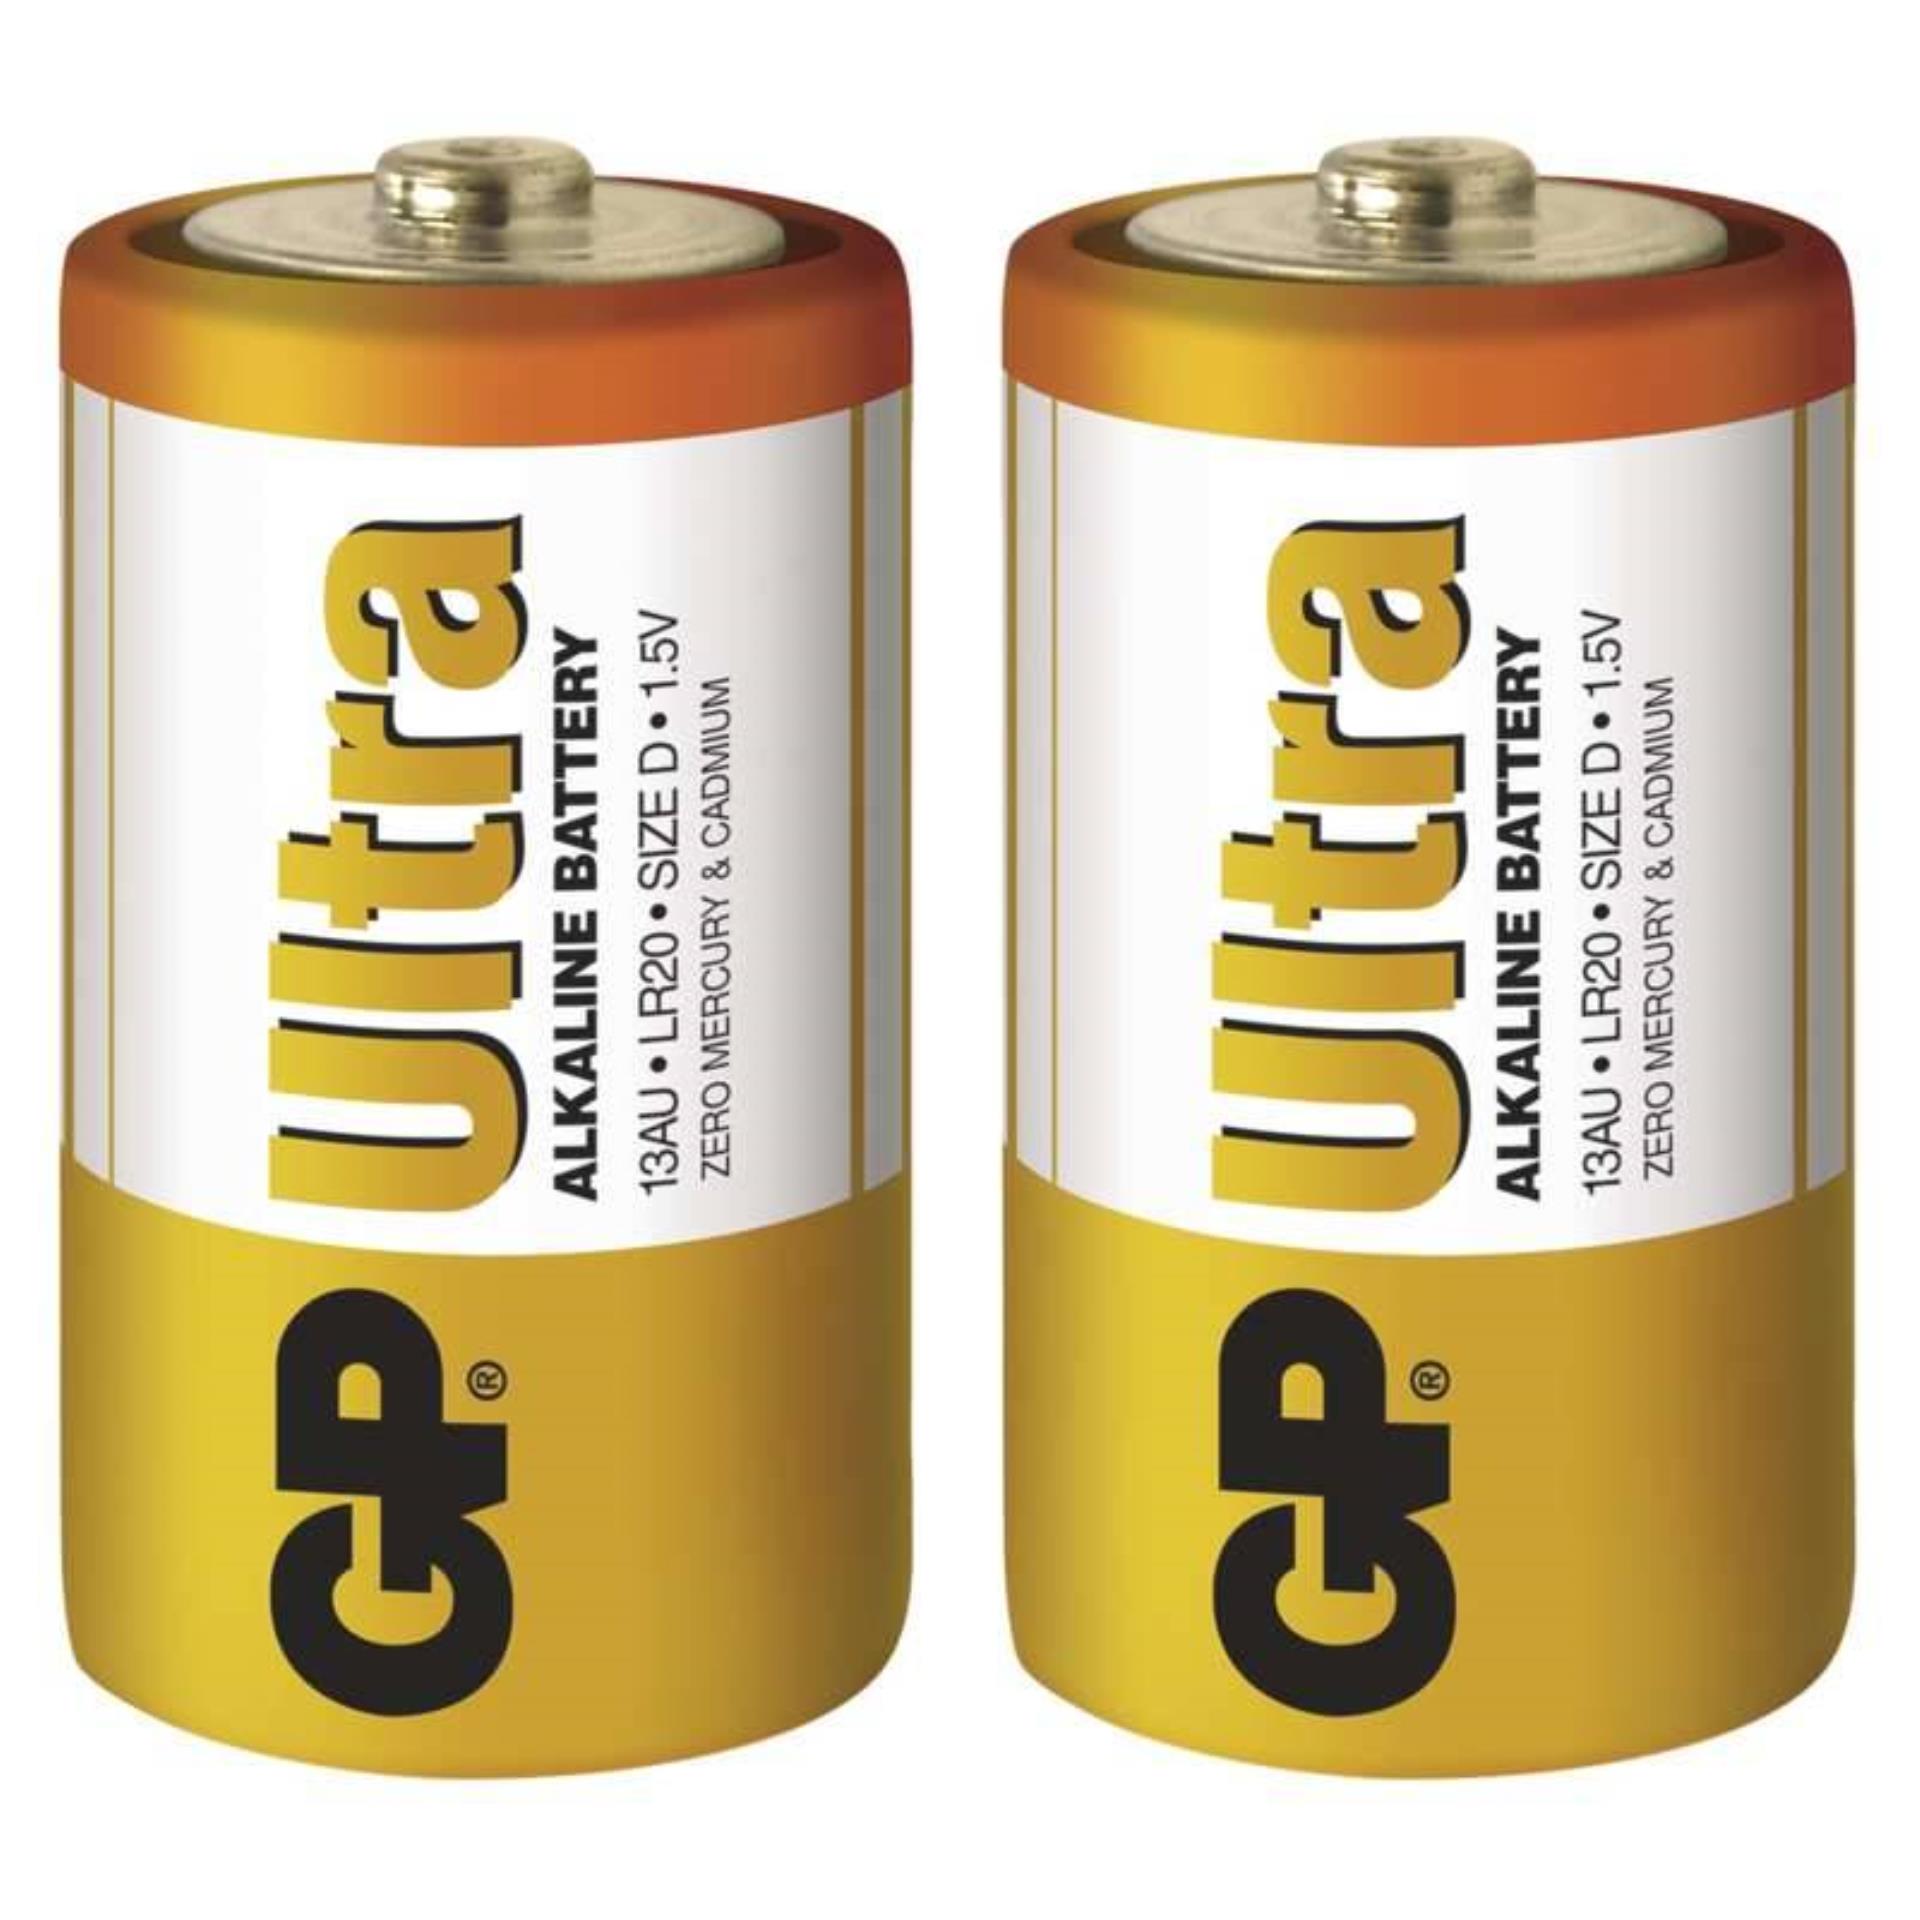 Baterie GP Ultra Alkaline 1,5 V, R20 typ D, 2 ks